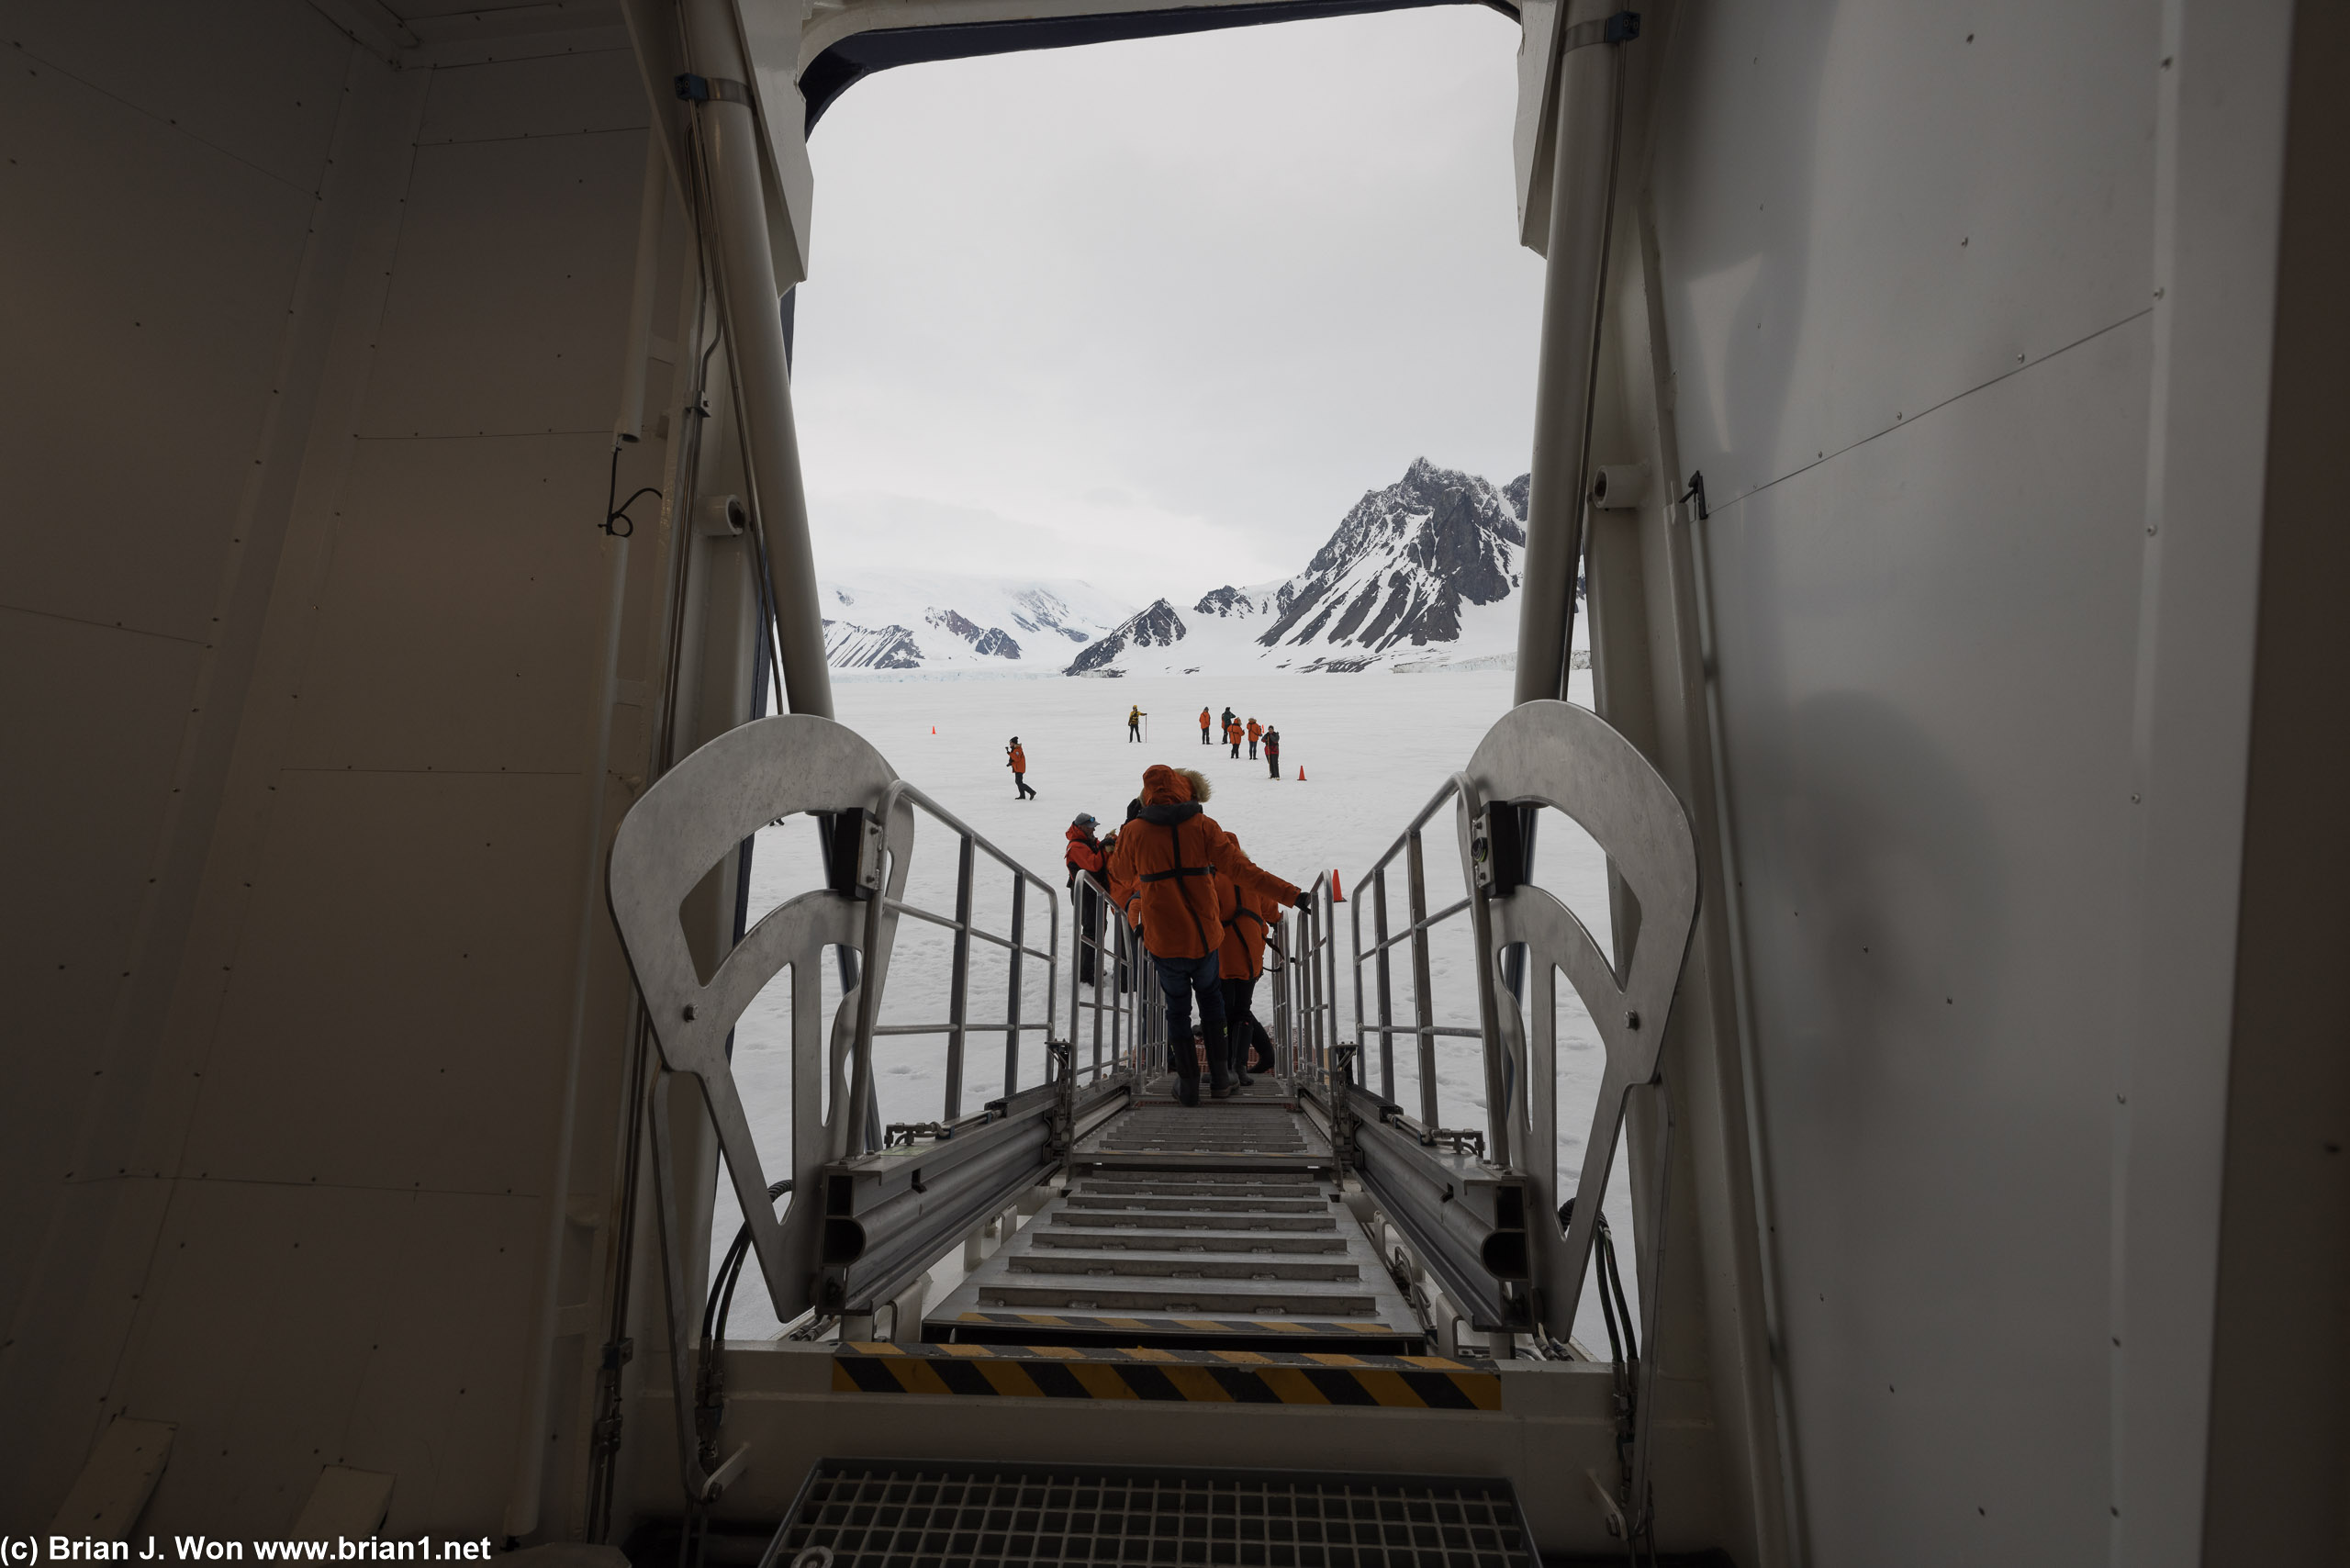 Descending to the ice shelf.